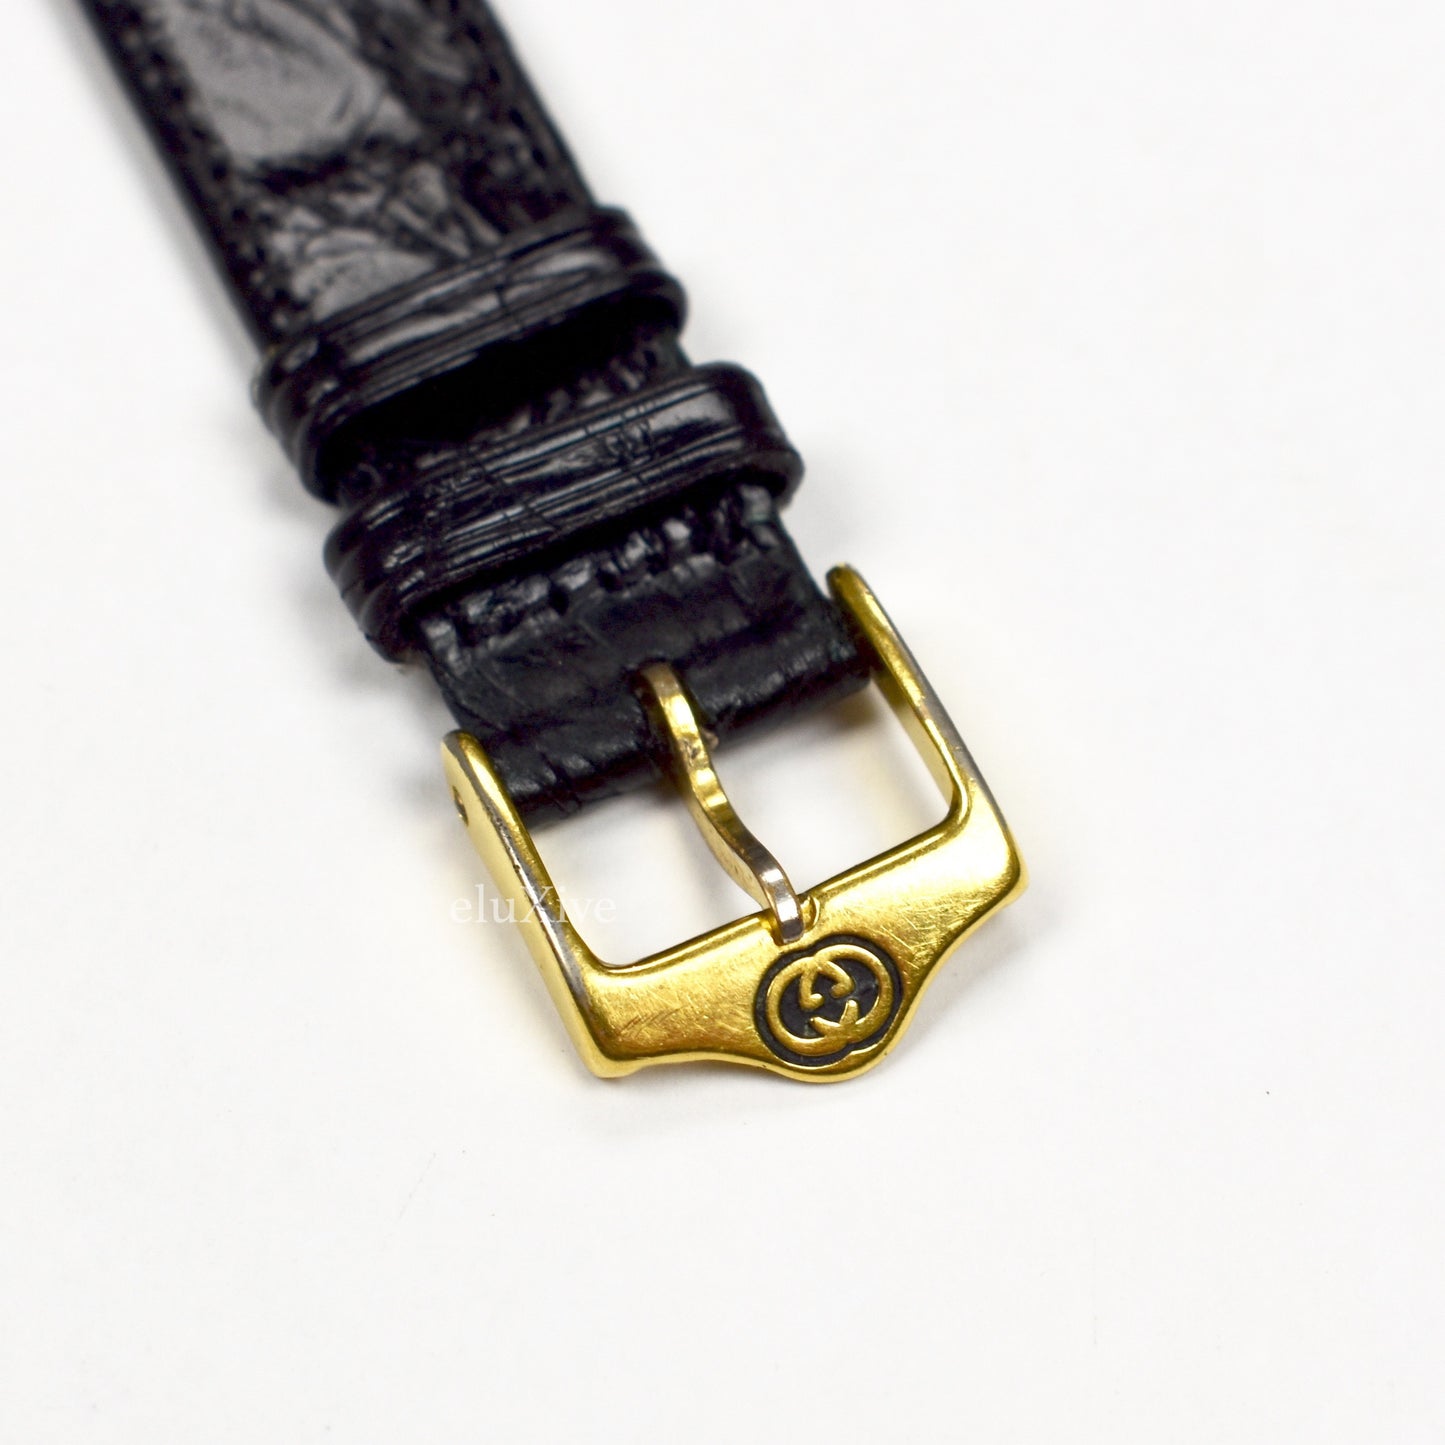 Gucci - Men's 2000M 2-Tone Dial Watch